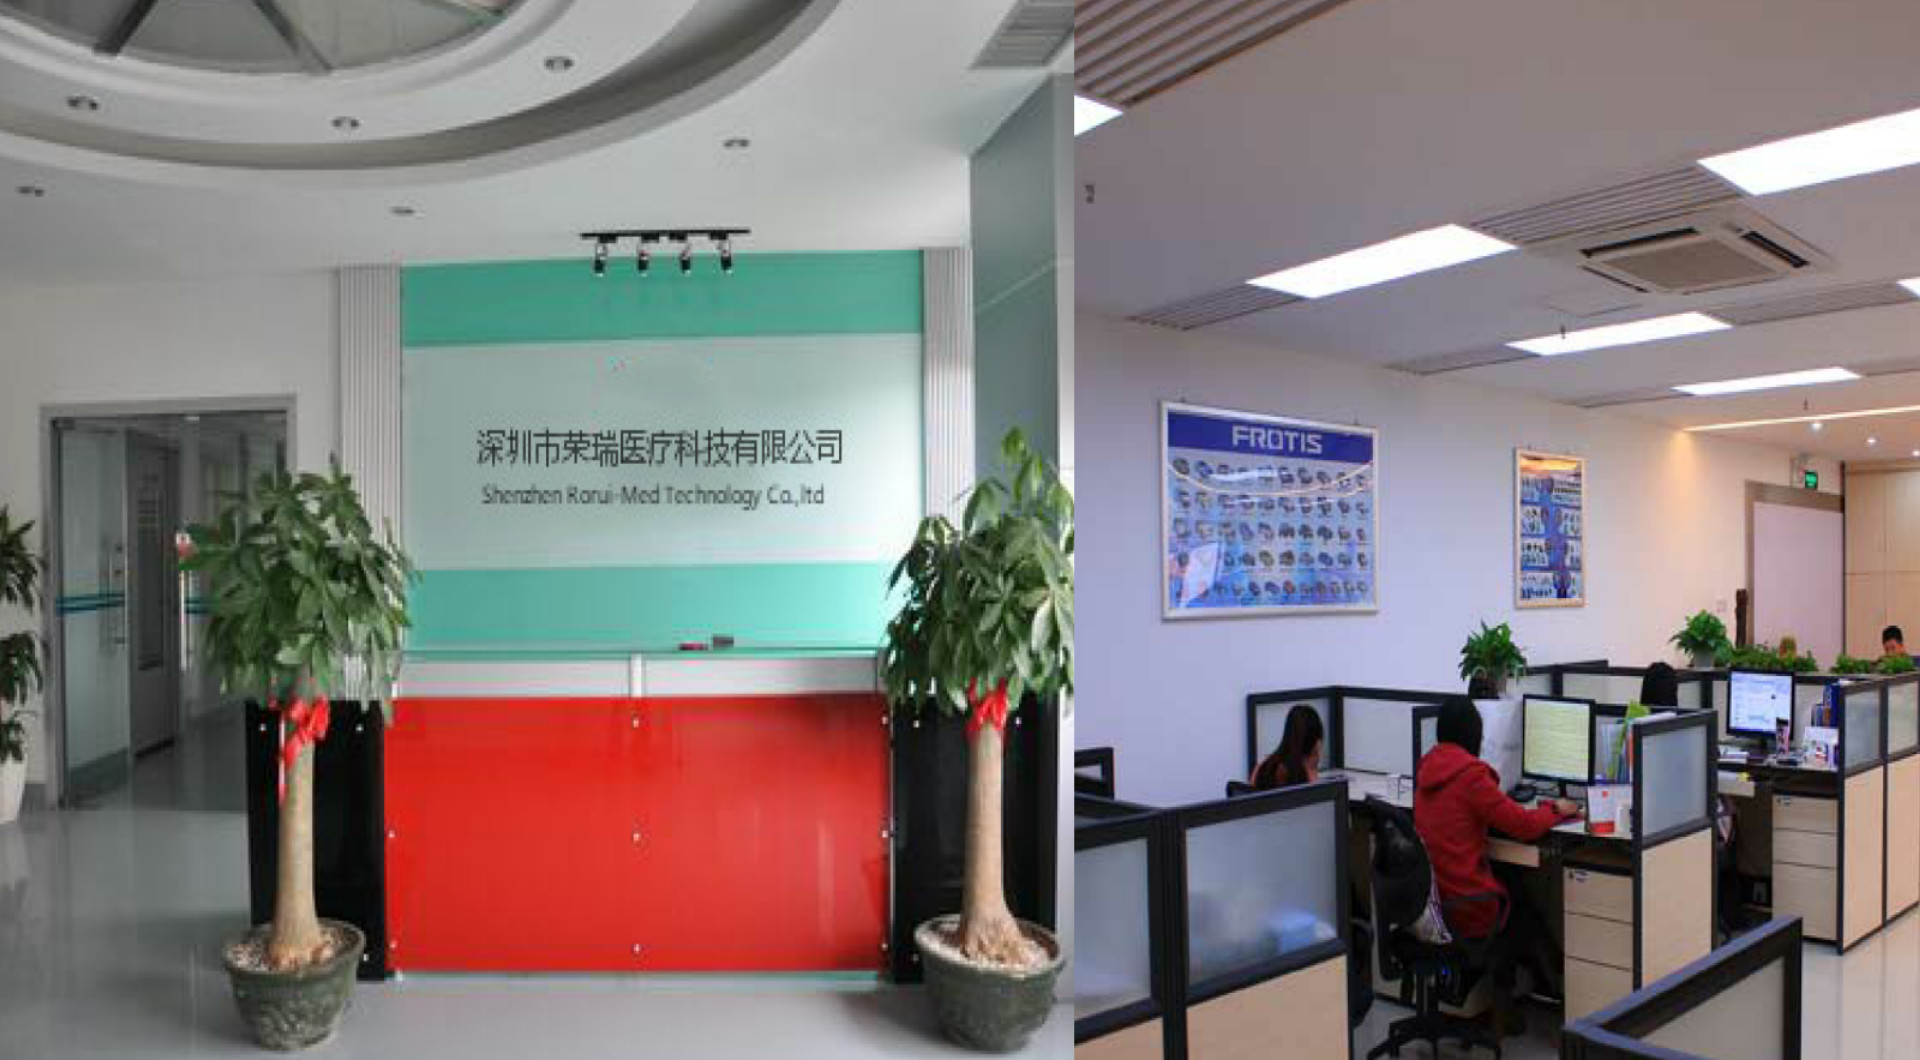 Shenzhen Rorui-Med Technology Co.,Ltd